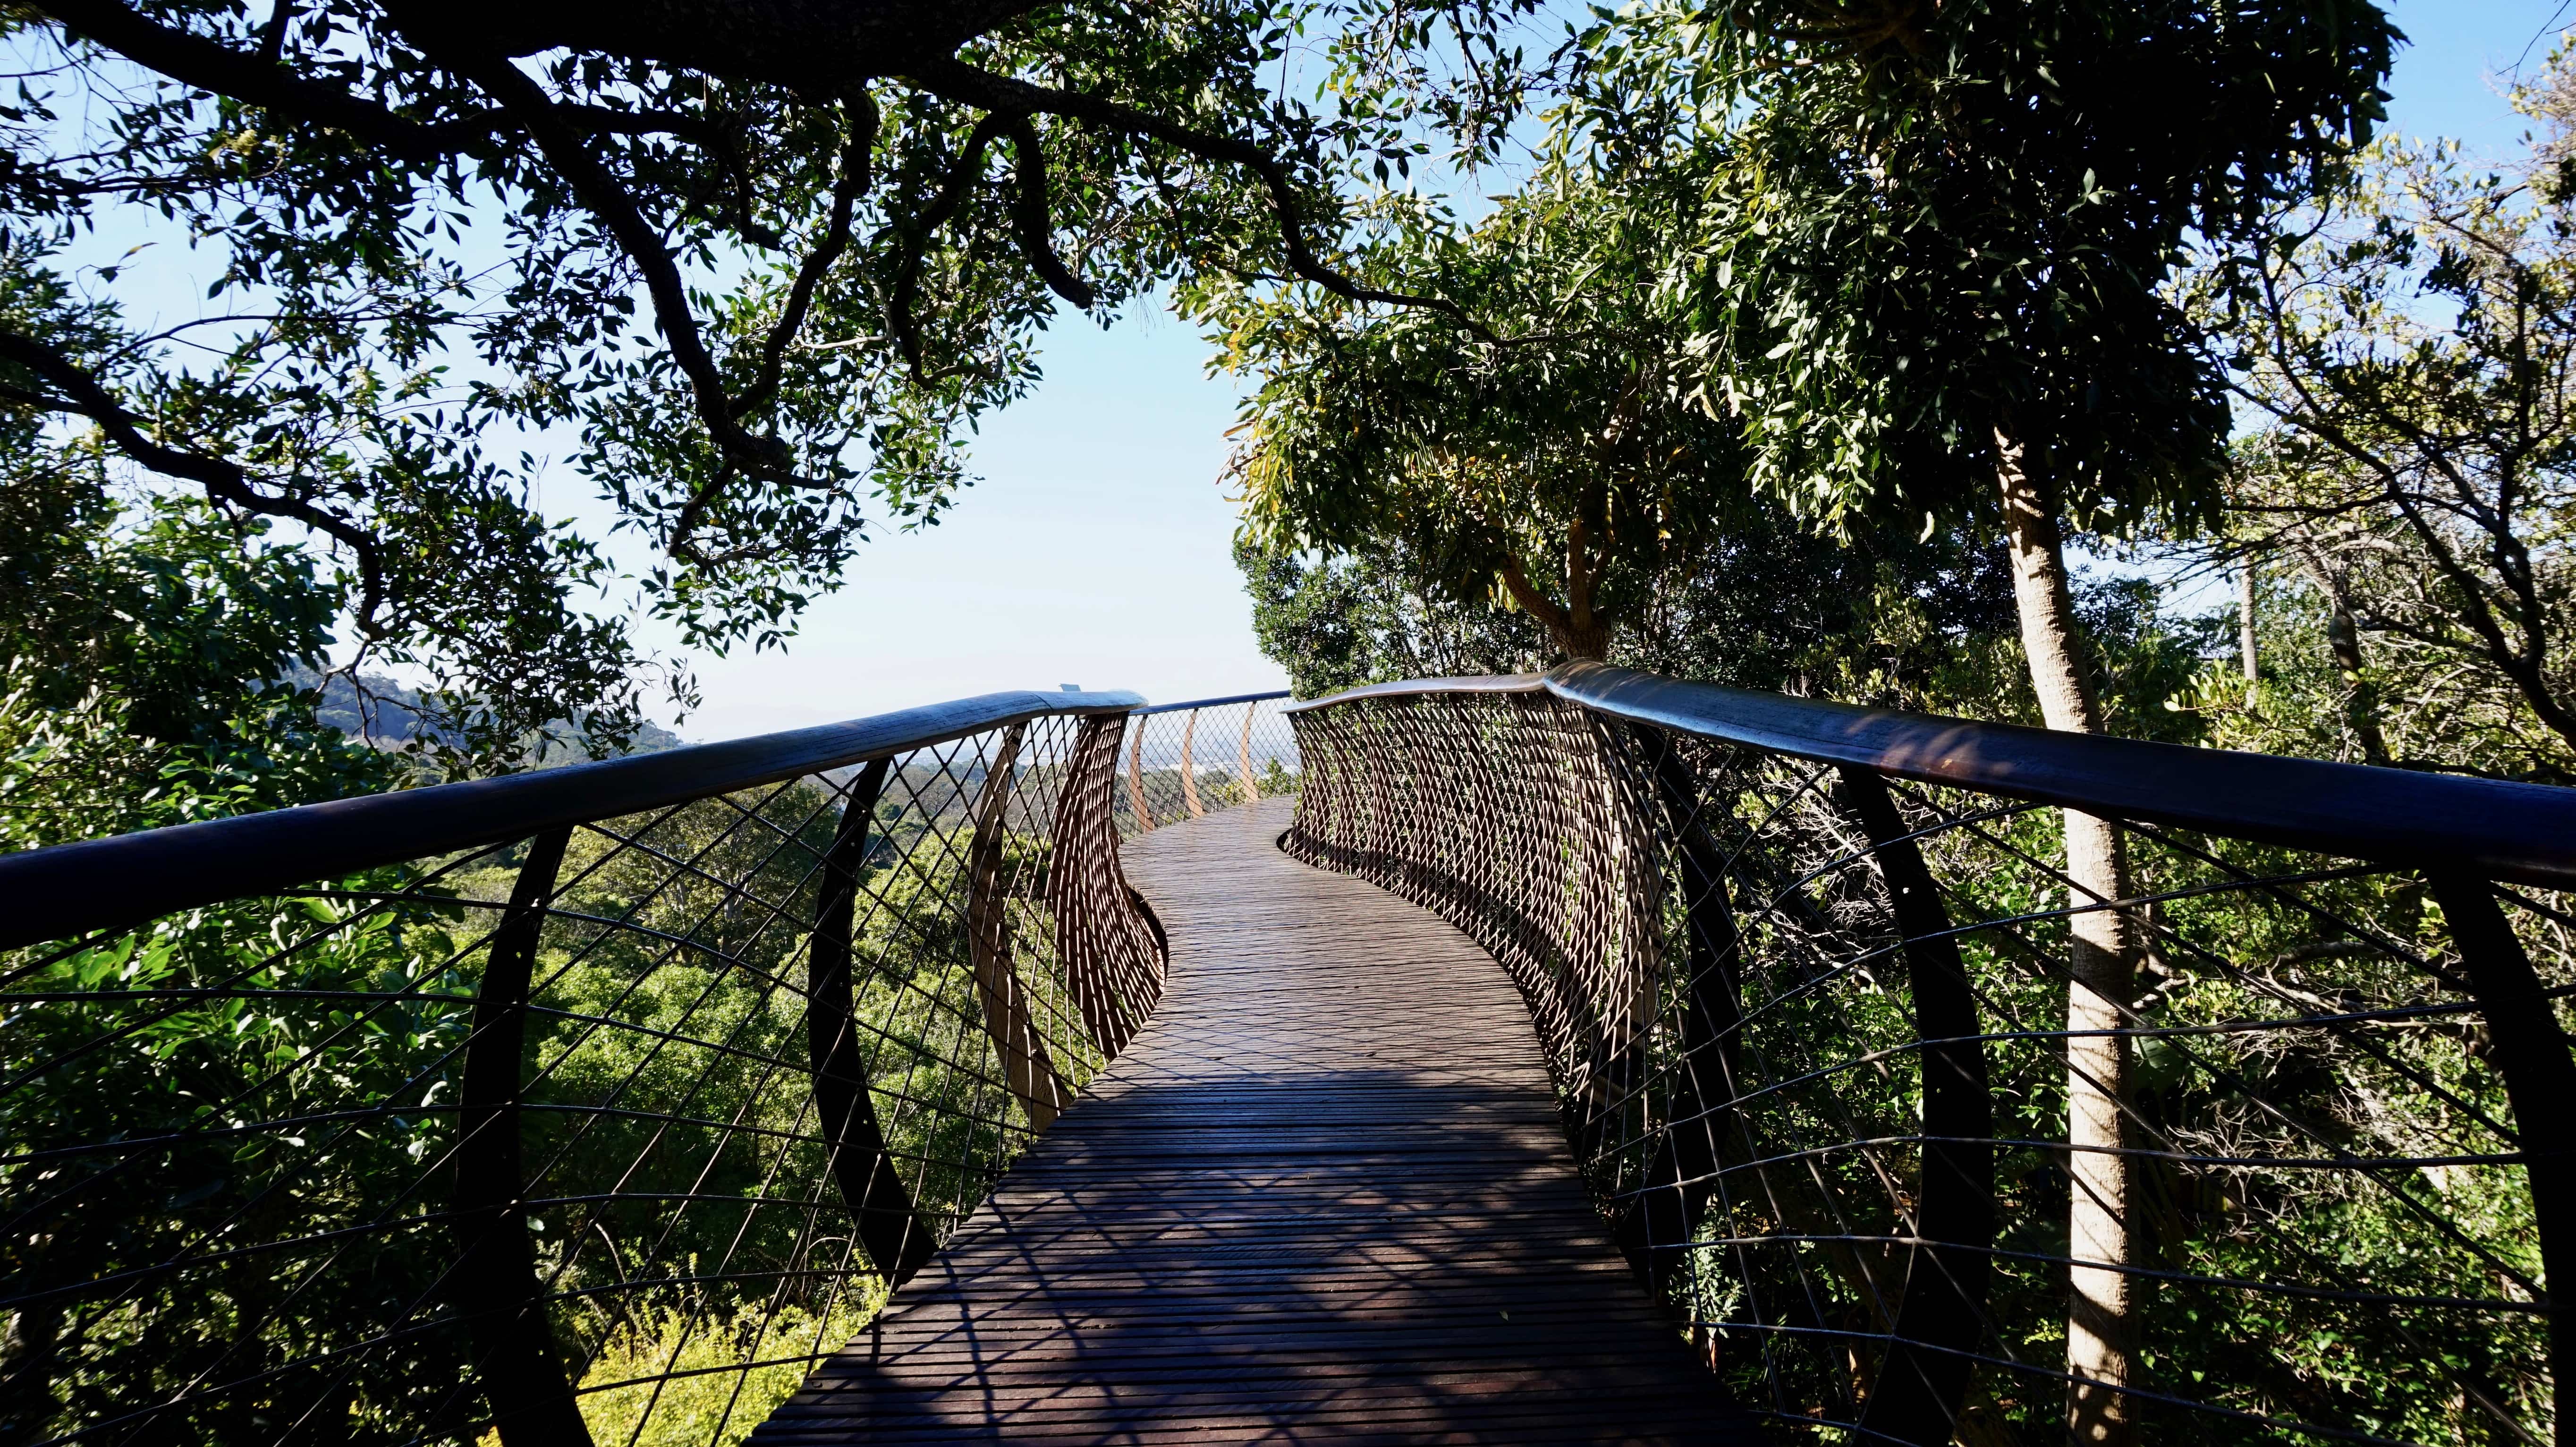 Centenary Tree Canopy Walkway at Kirstenbosch Botanical Gardens, South Africa